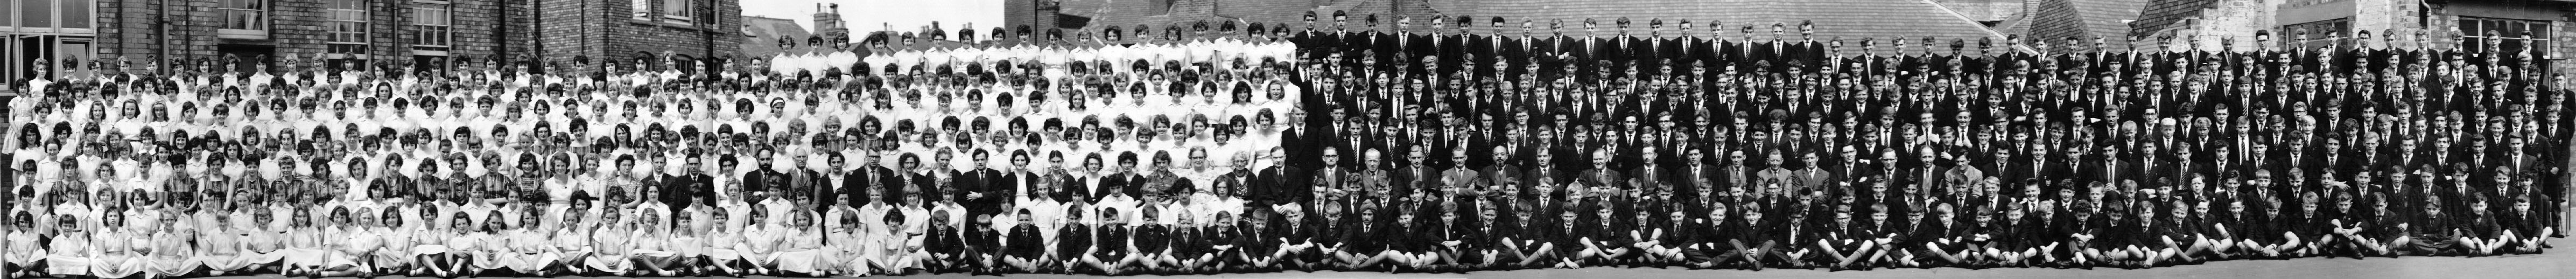 1963 panoramic school photograph> </p>
</div>
<div class=